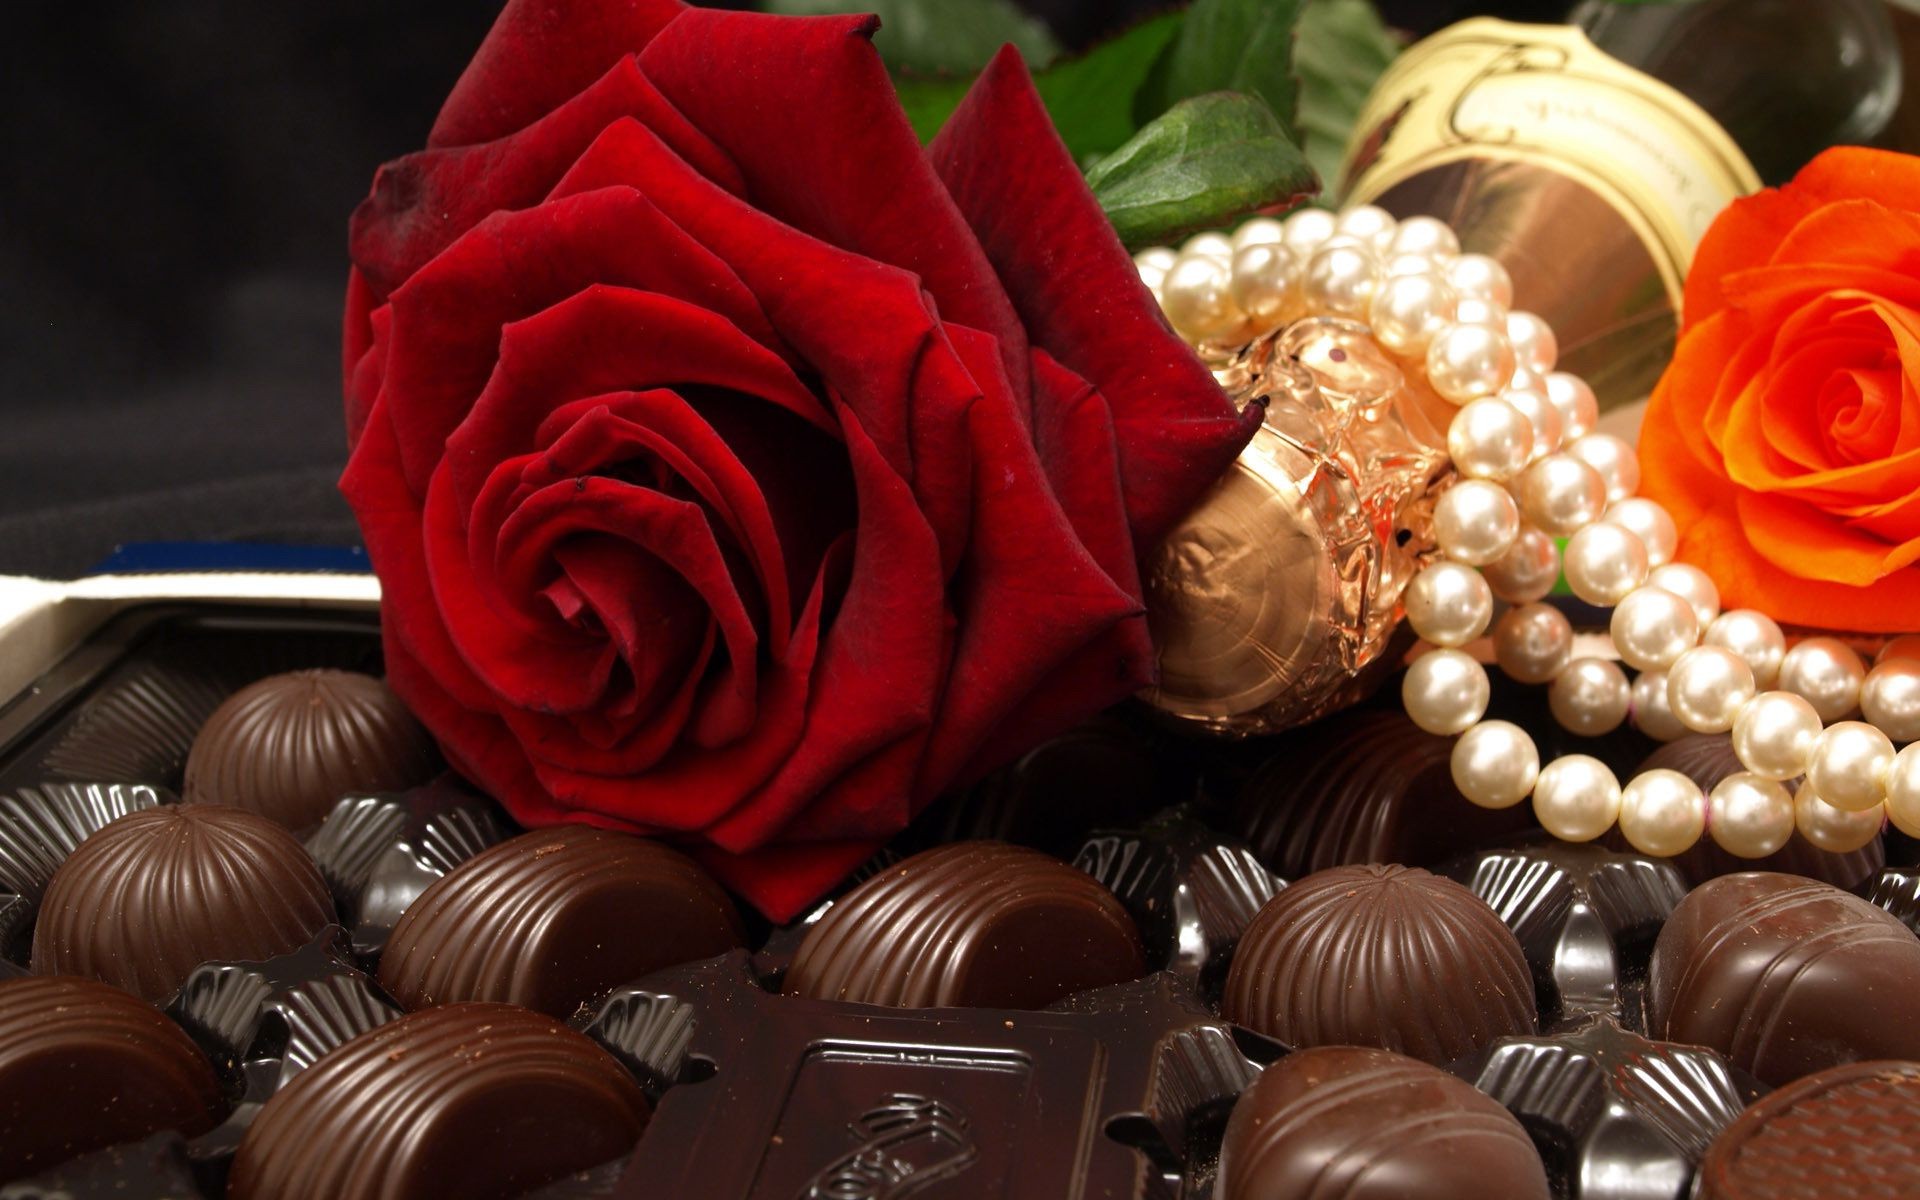 food & drink romance candy chocolate gift love romantic dark sugar wedding confection kind praline rose